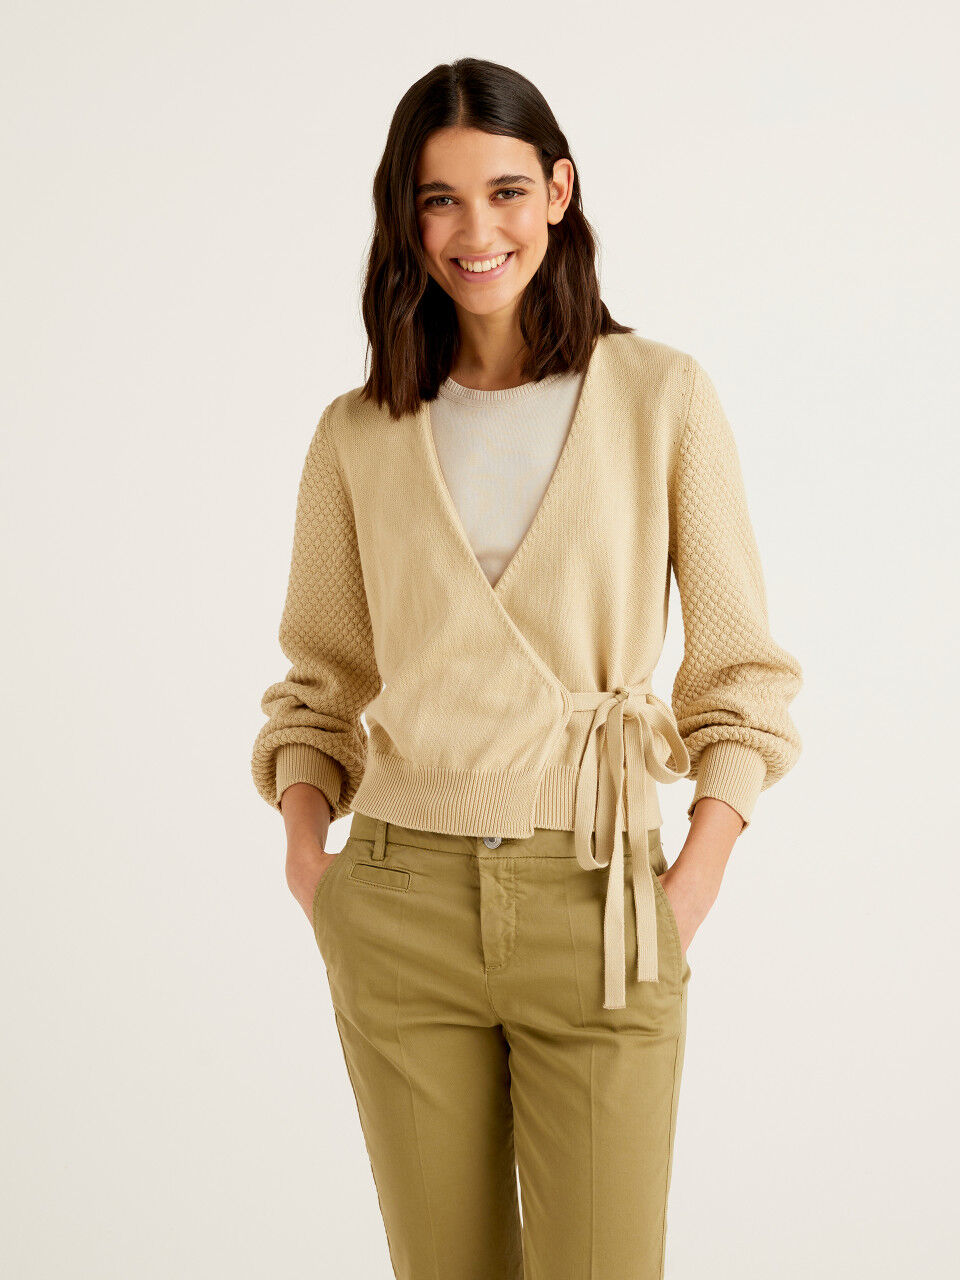 New Women Sweater Cardigan Knitted Slim Waist Round Neck Short Jacket Coat Tops 